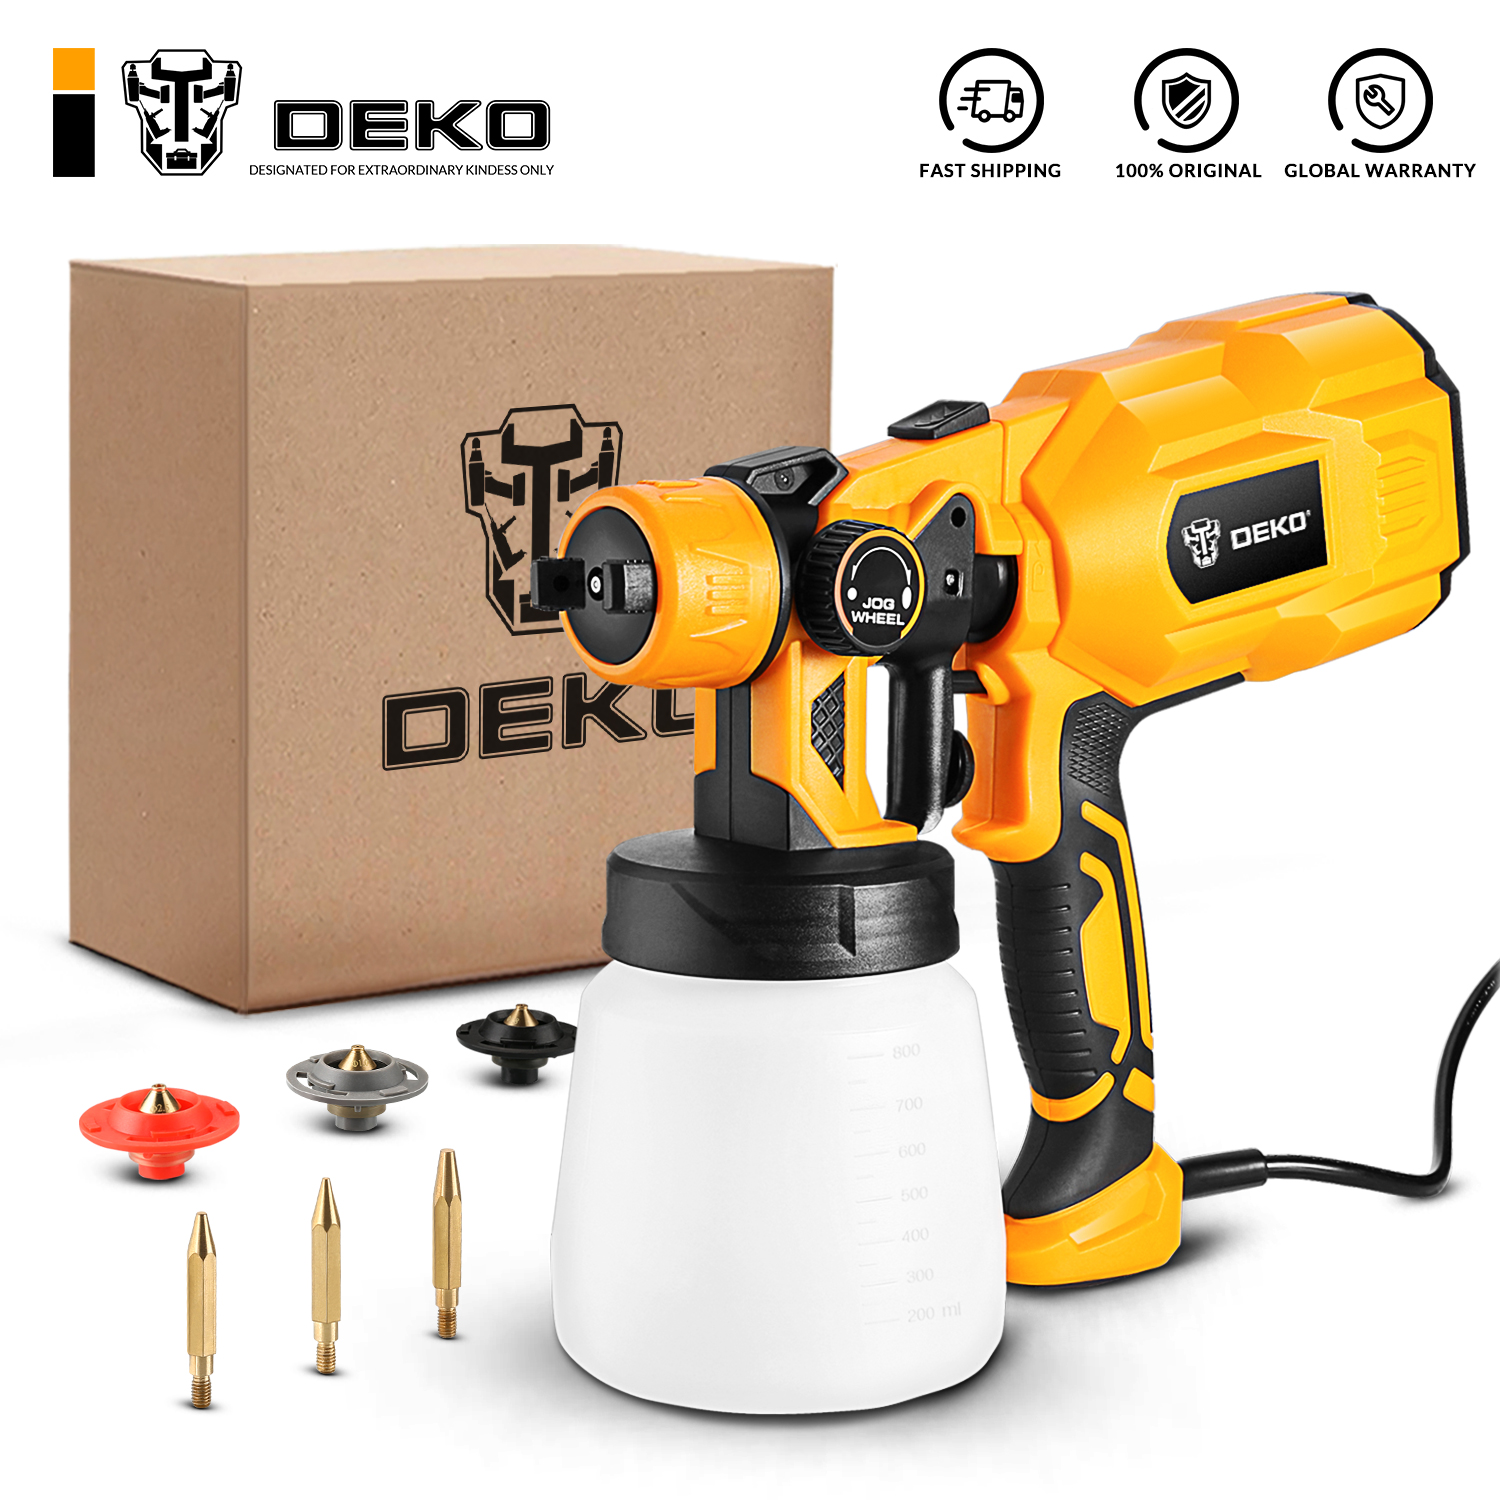 DEKO 550W Electric Handheld Spray Gun, 3 Nozzle Sizes,HVLP Spay Gun,For Painting Wood ,Furniture, Wall,Easy Spraying by DKSG55K1